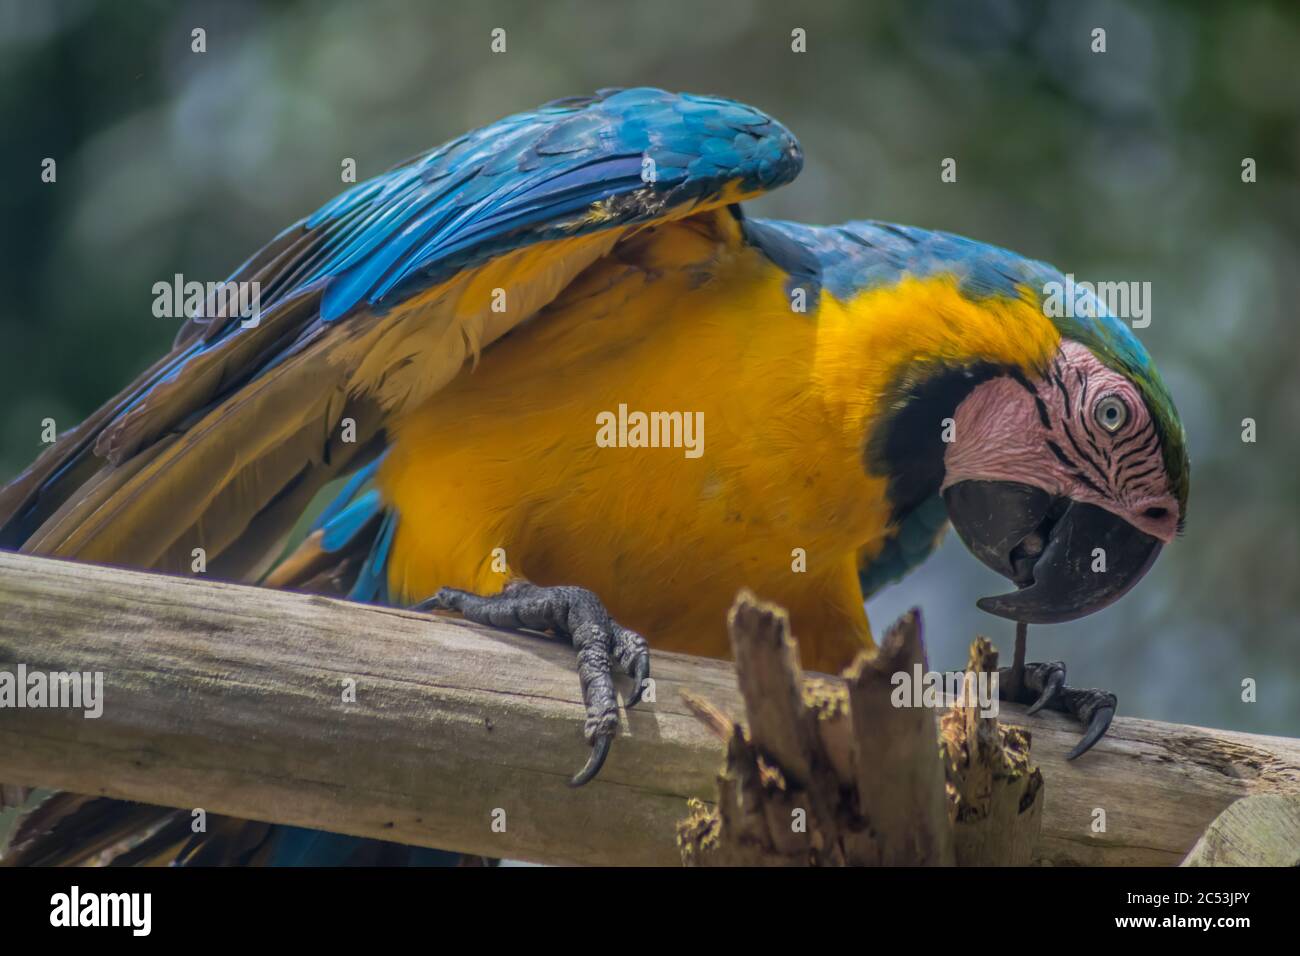 A macaw (Ara ararauna) pulling a nail Stock Photo